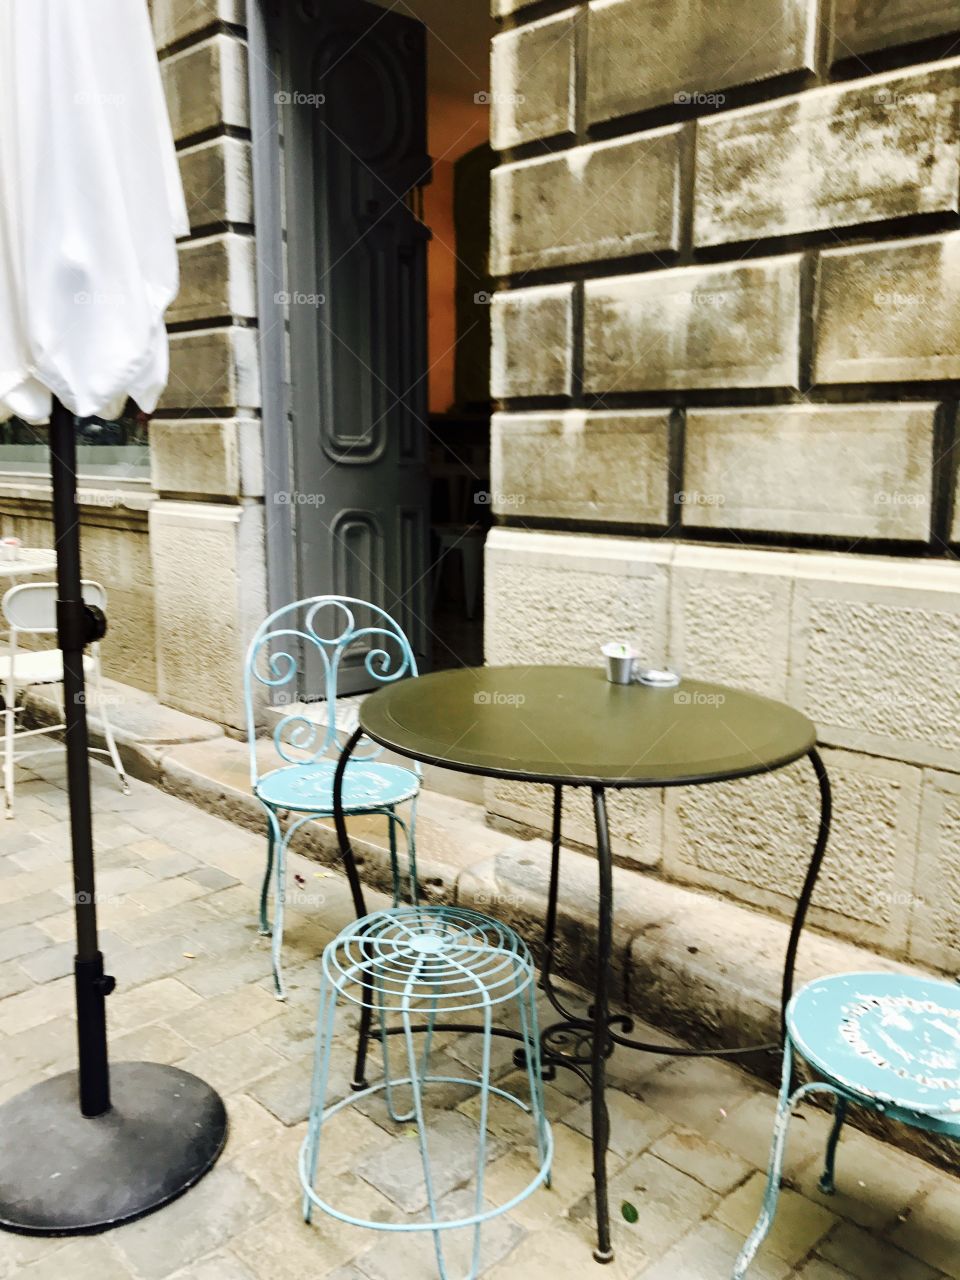 #outdoors #coffee #tea #table #chairs